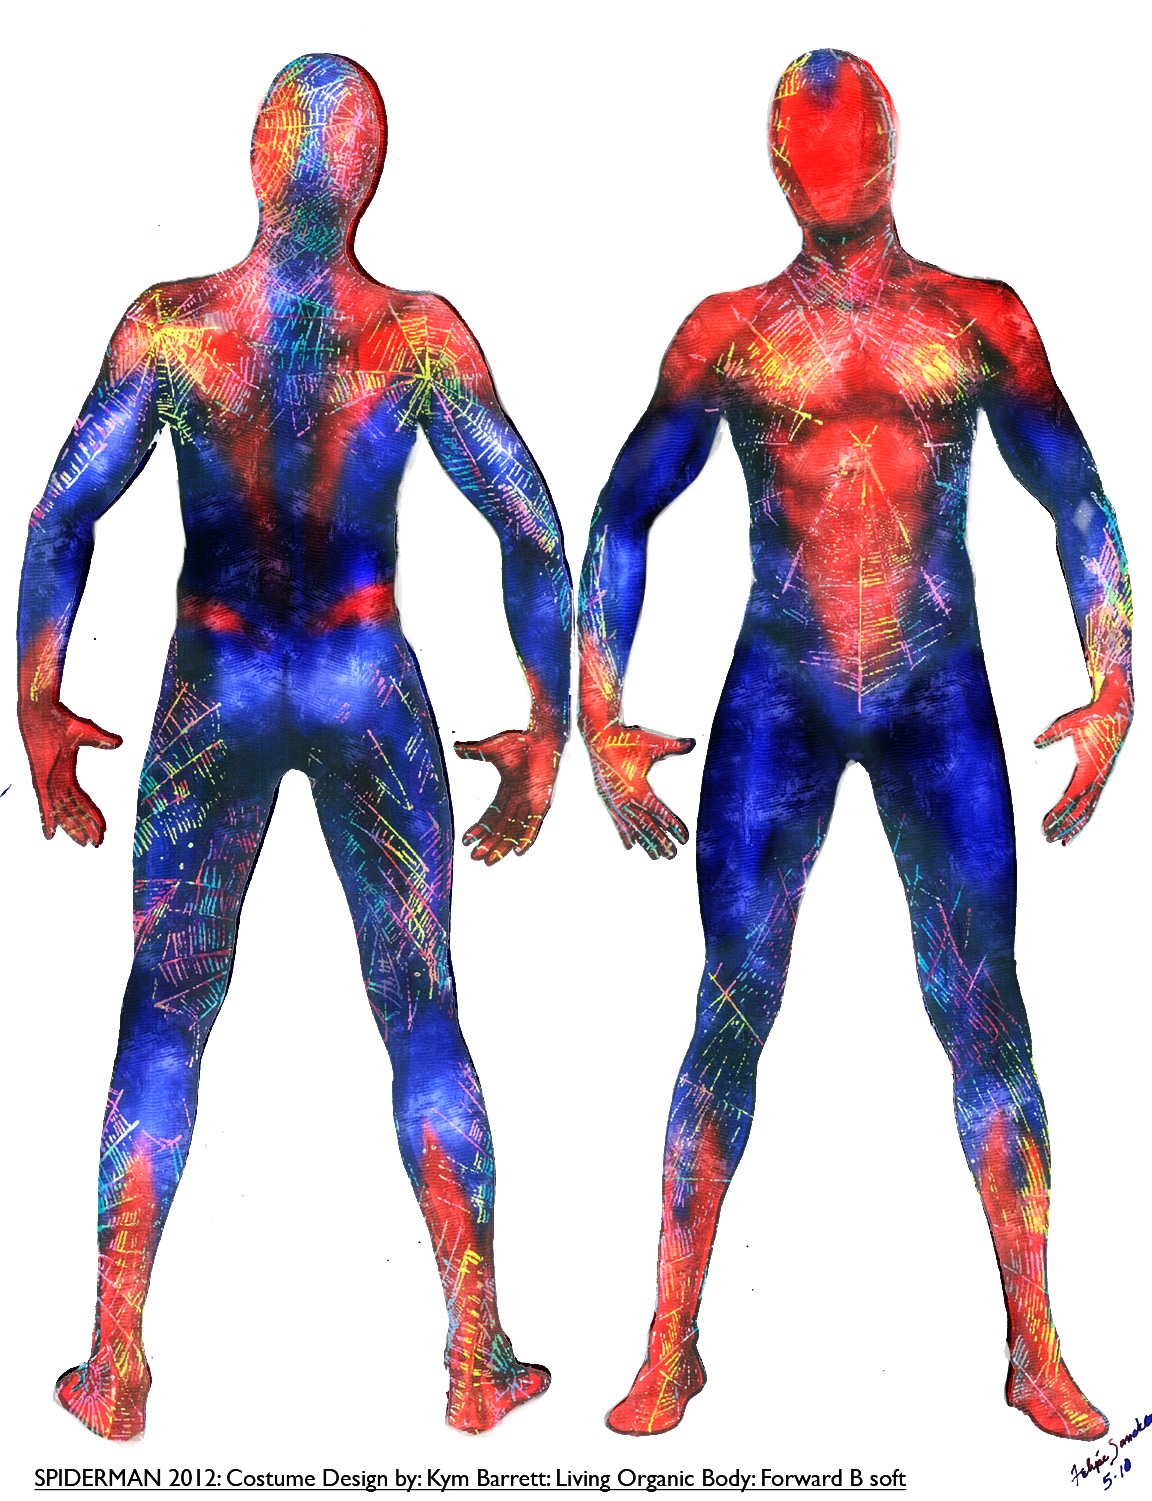 Film Sketchr: Felipe Sanchez' Never Before Seen 'The Amazing Spider-Man' Costume Designs